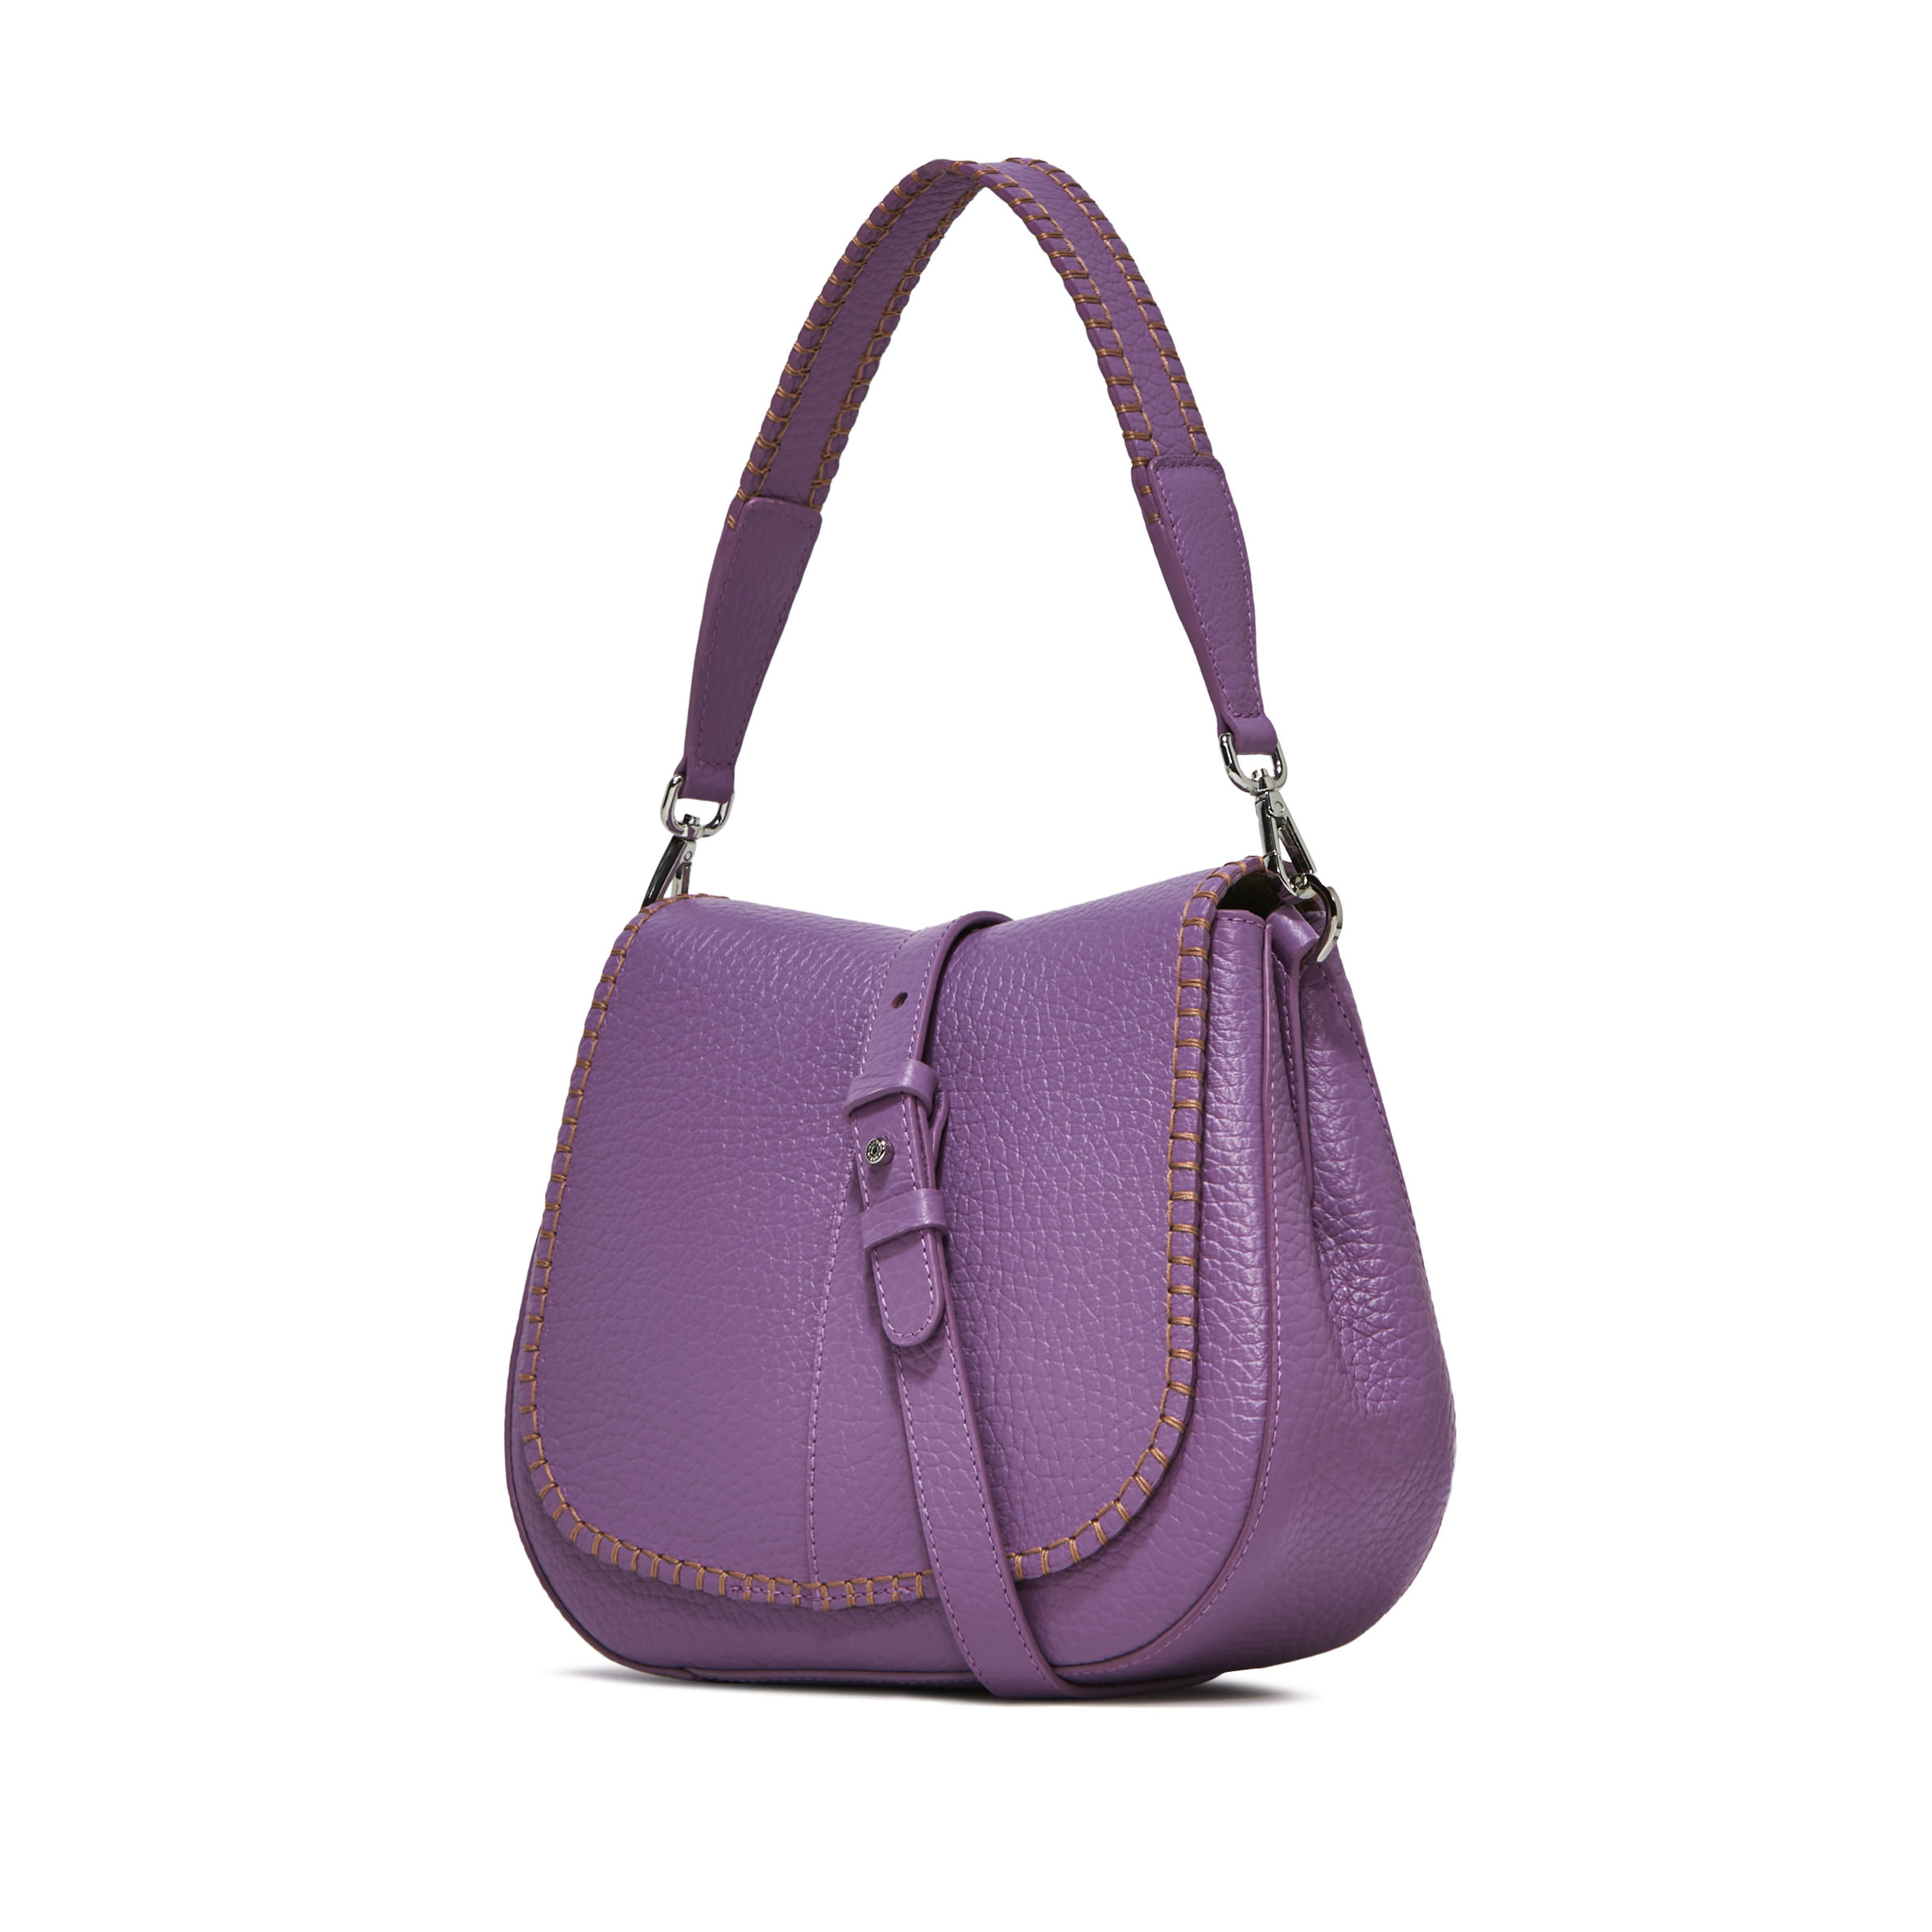 Gianni Chiarini - Helena Round bag in leather, Purple Wisteria, large image number 2